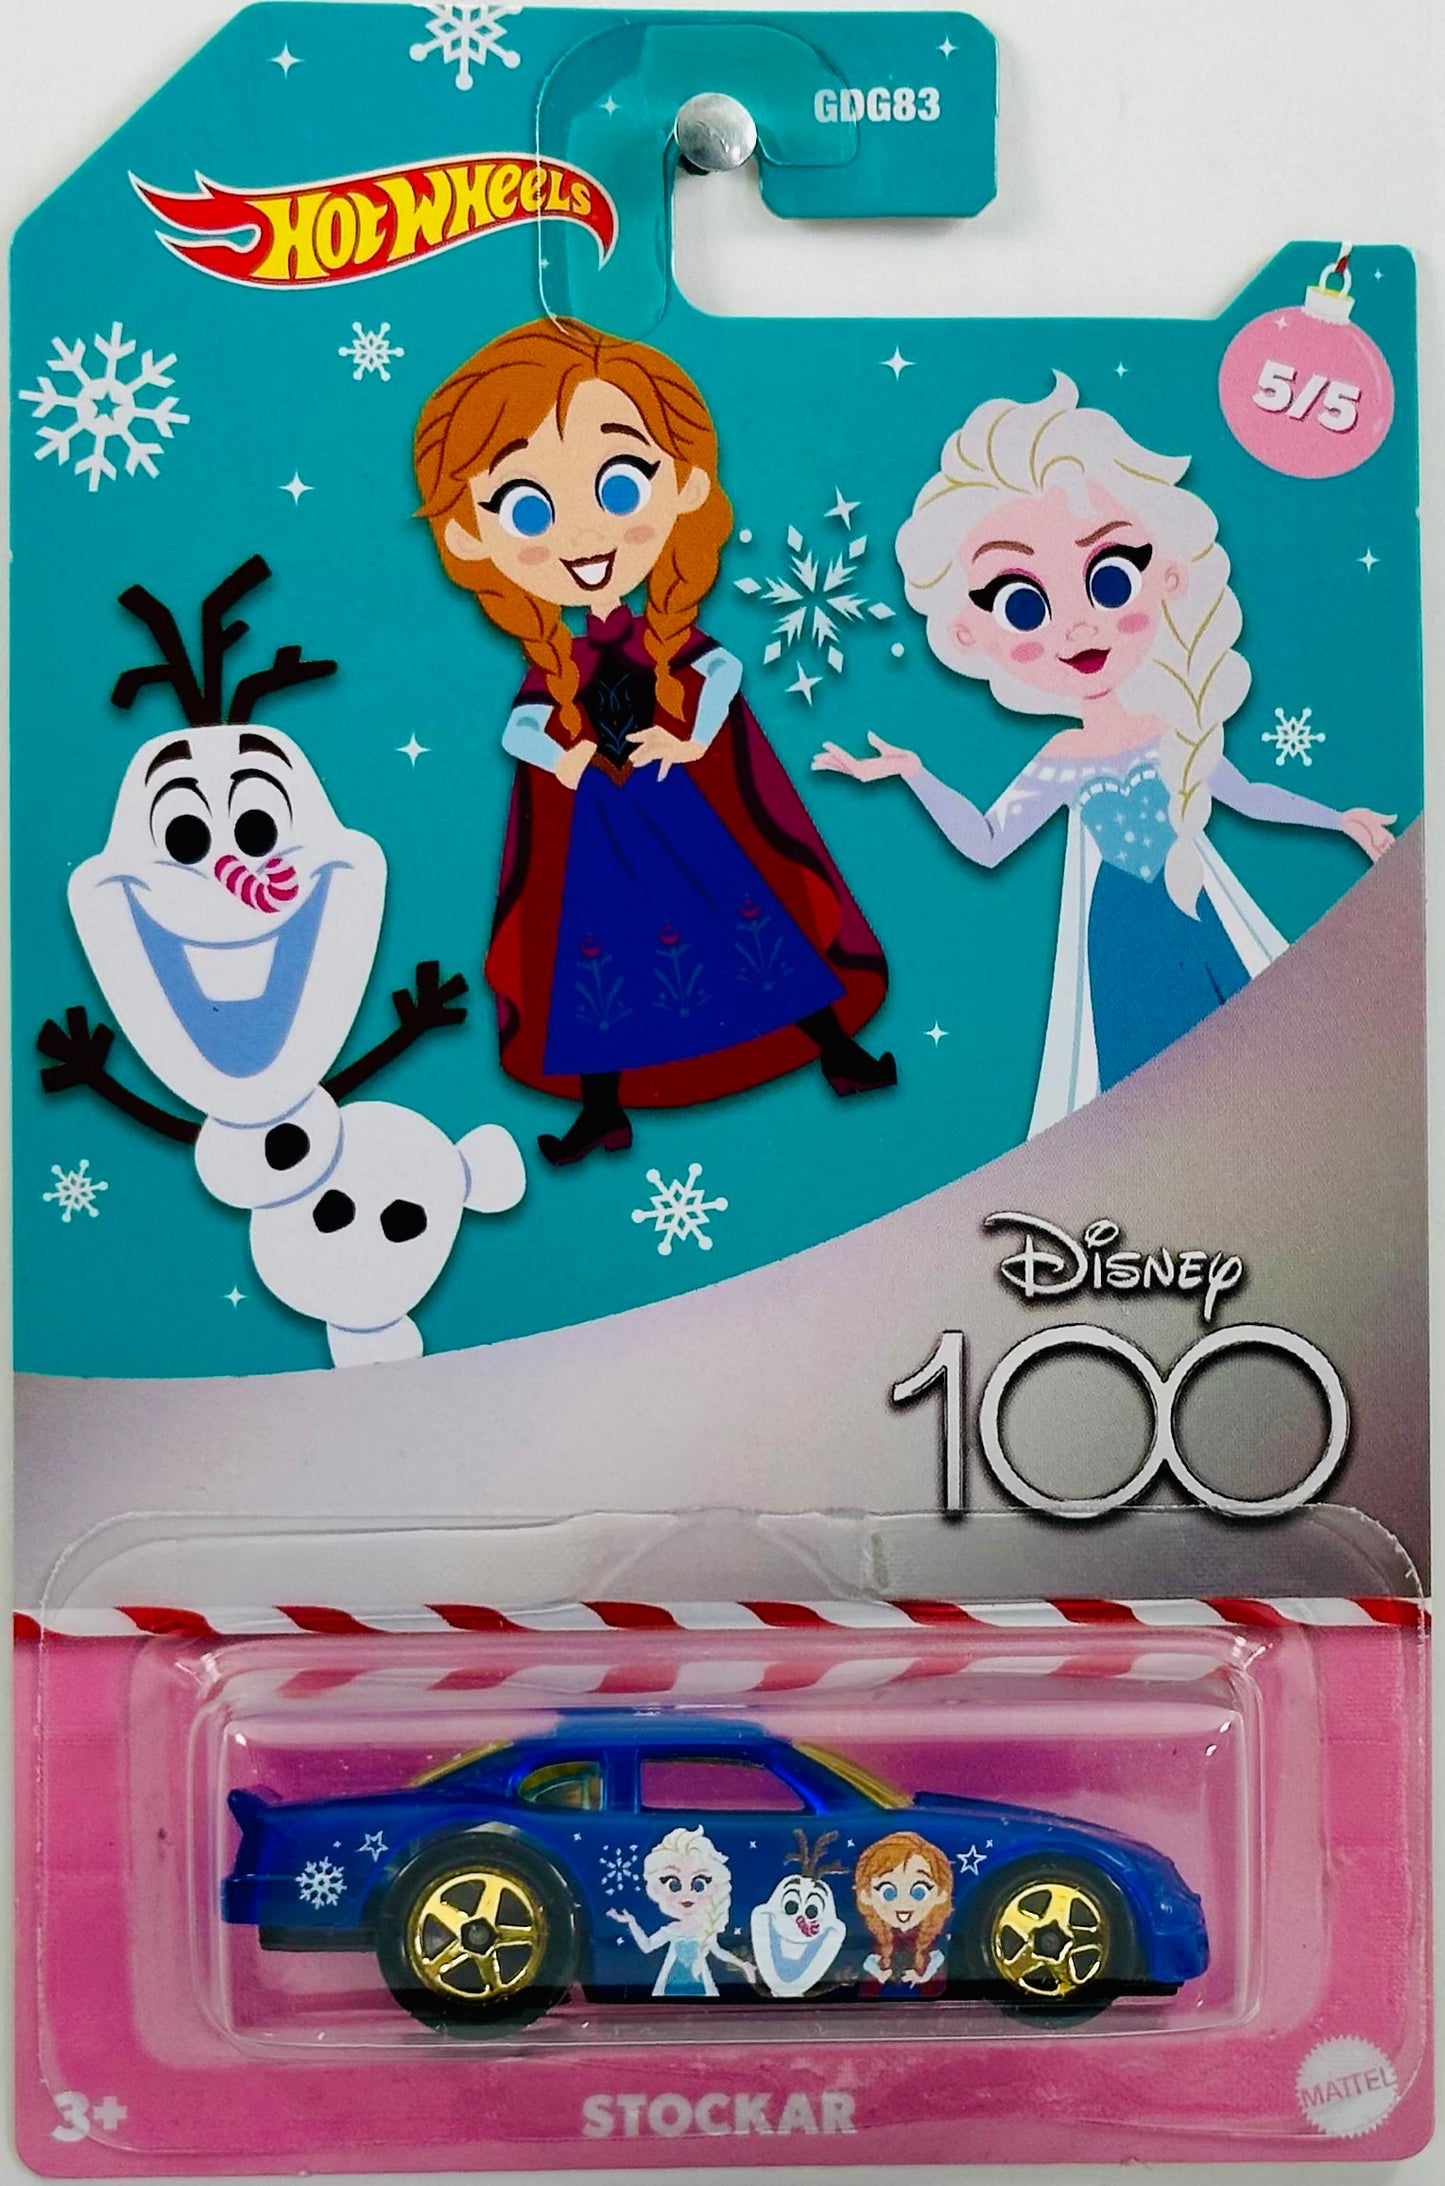 Hot Wheels 2023 - Disney 100 Holiday 05/05 - Stockar - Navy Blue - Elsa, Anna & Olaf / Frozen - Walmart Exclusive